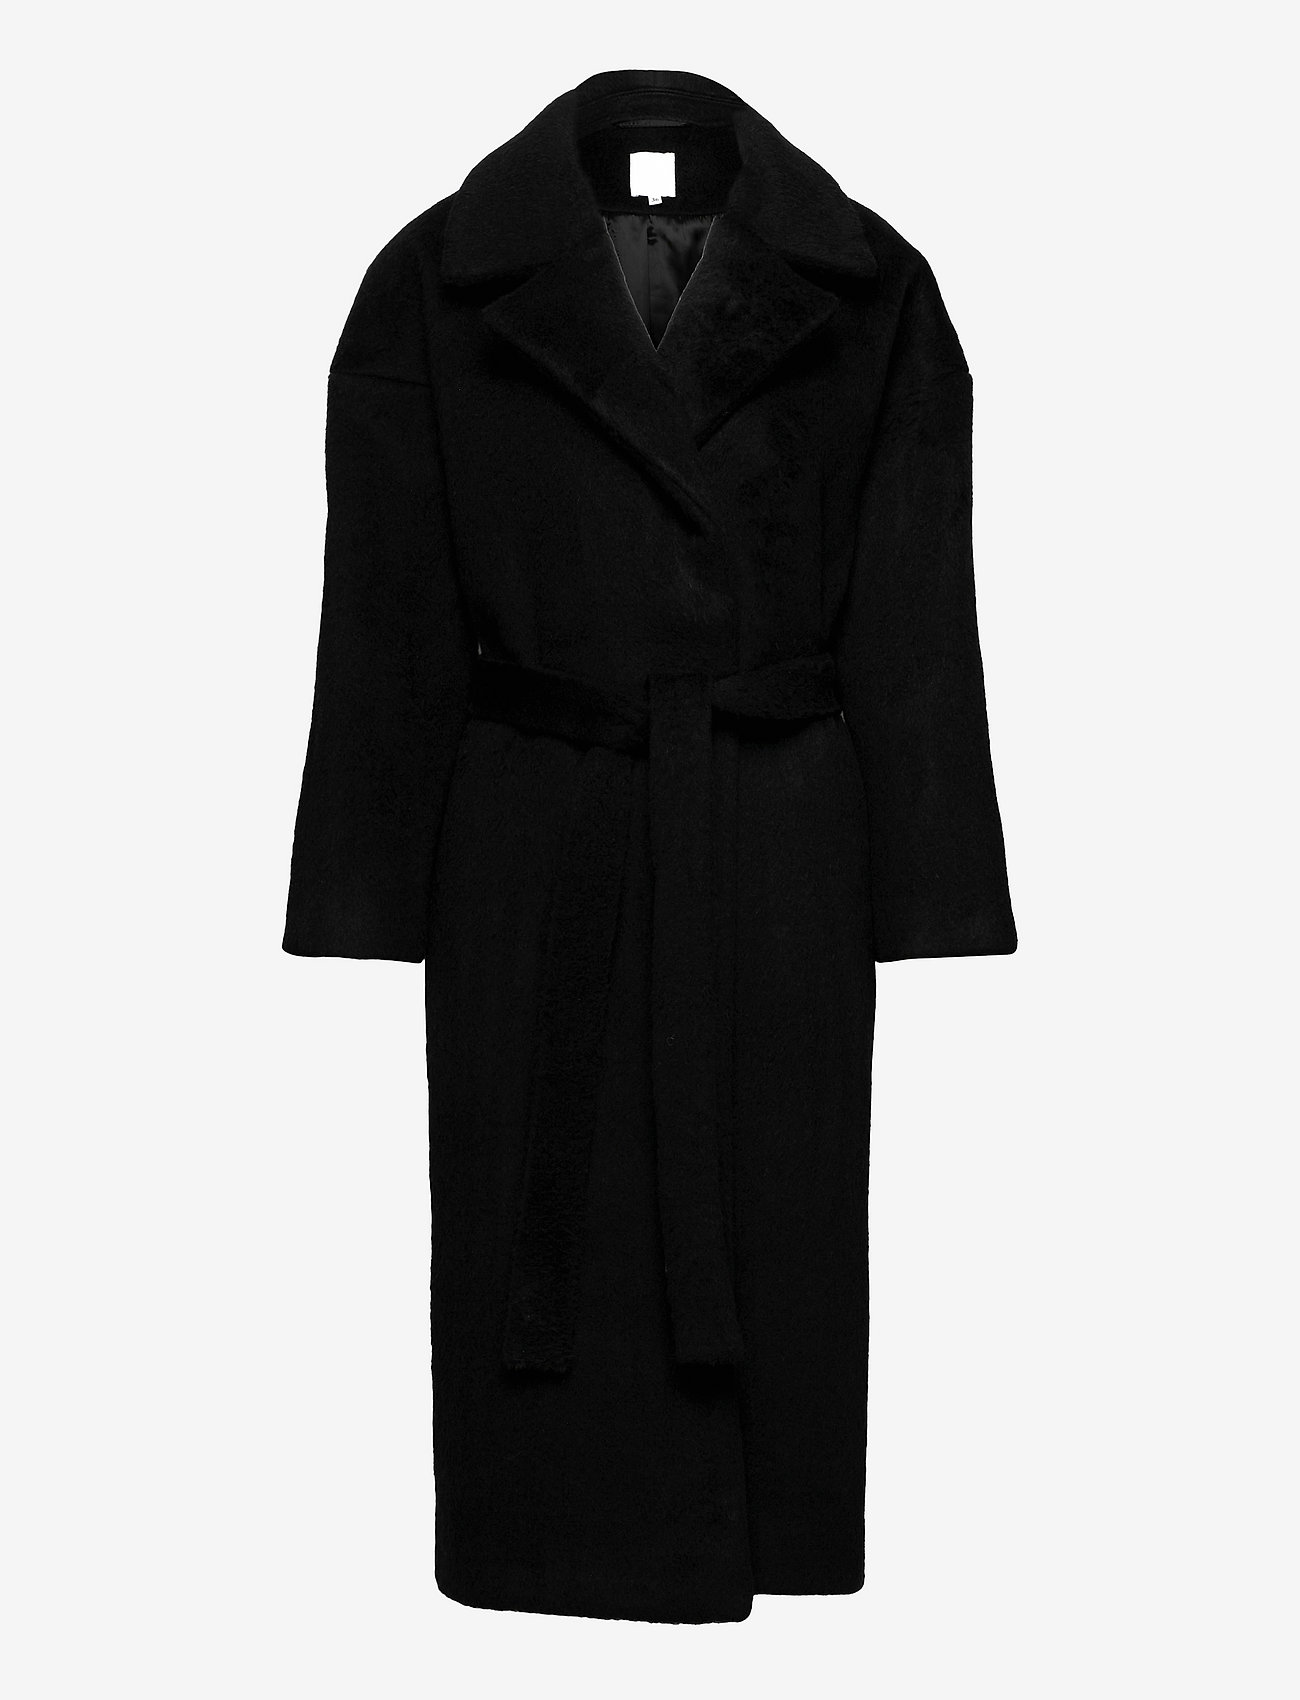 hálo - KAAMOS long coat - winter coats - black - 0